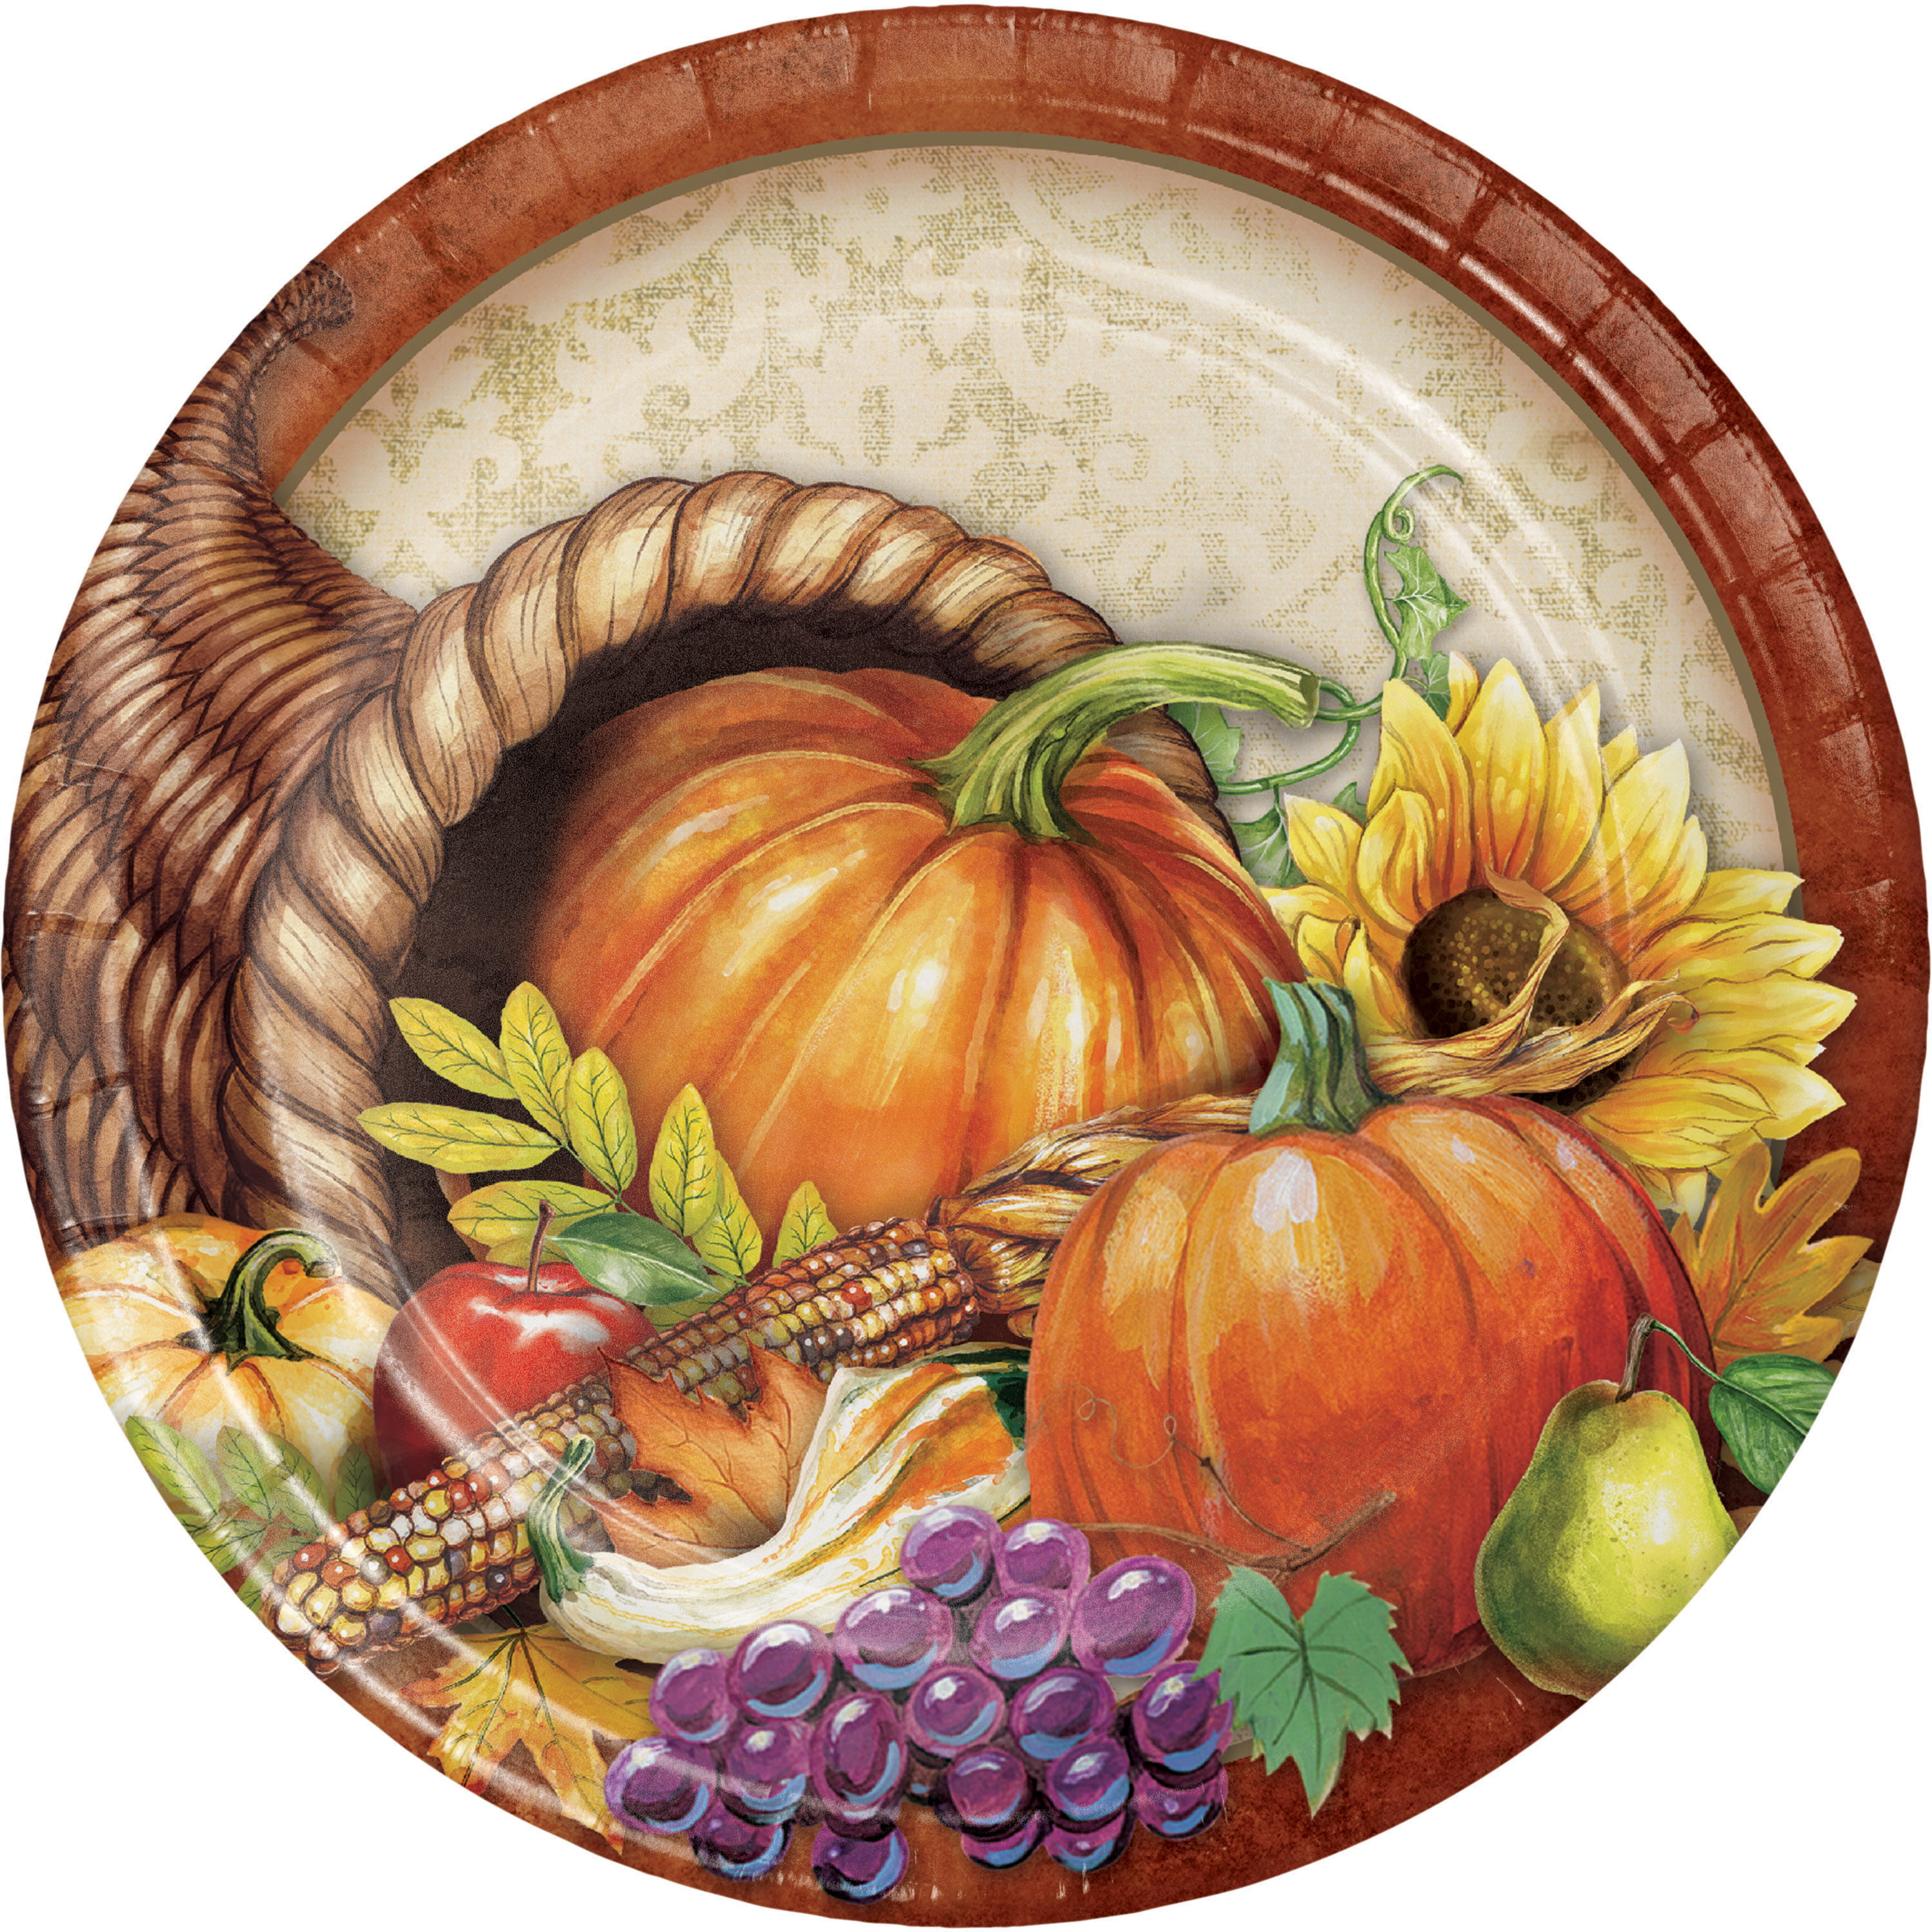 Harvest Thanksgiving Paper Plates, 24 count - Walmart.com